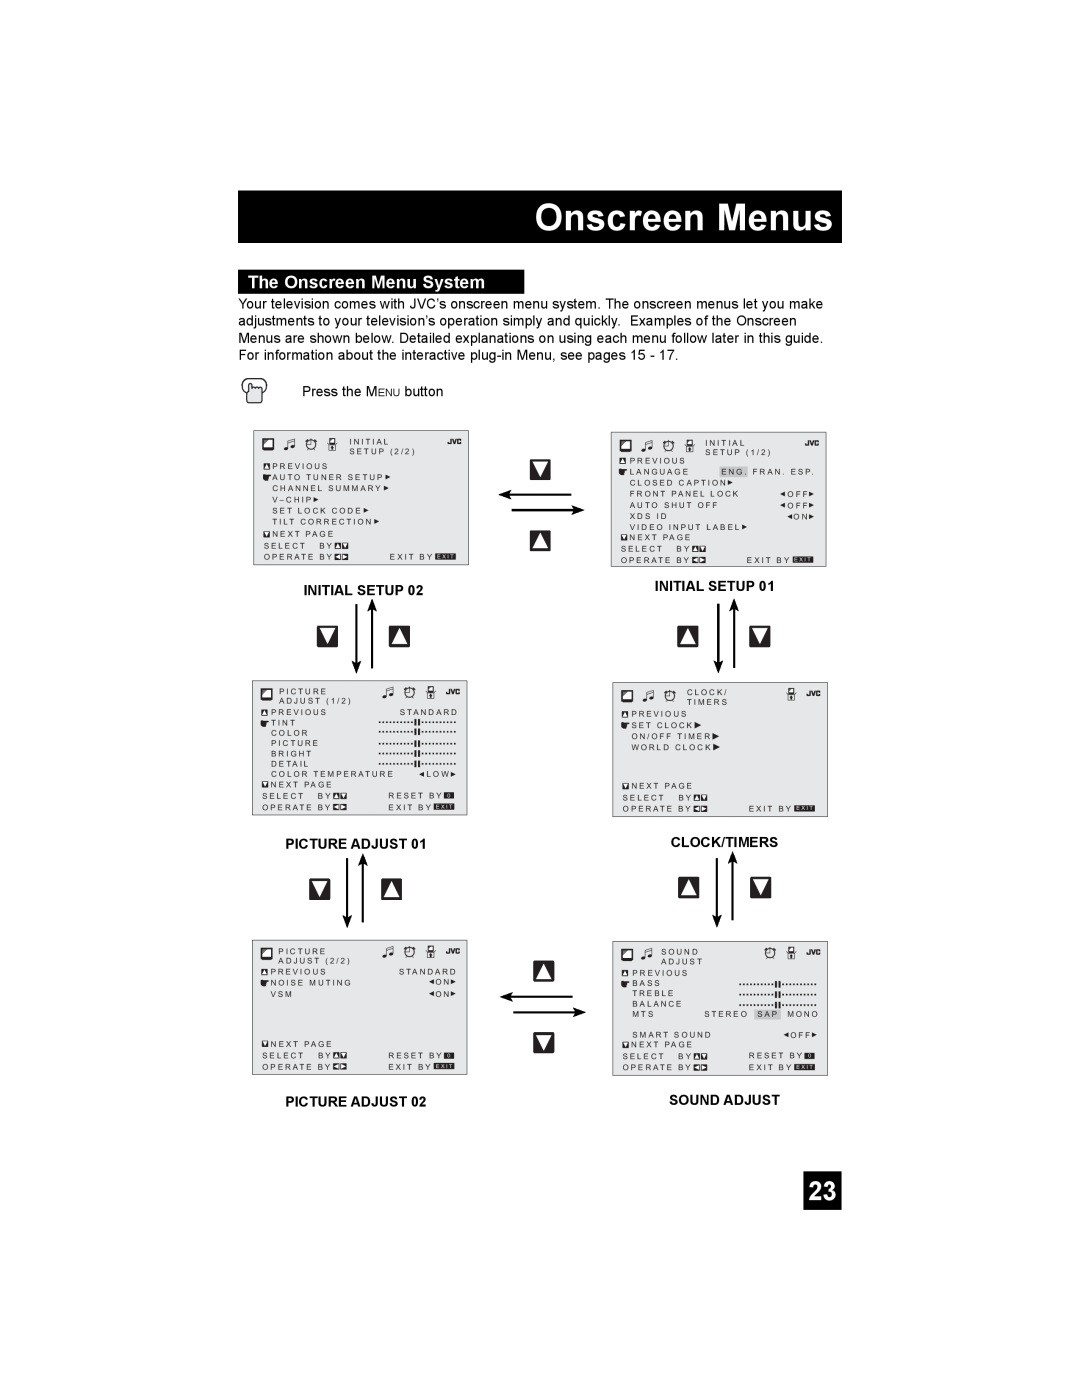 JVC AV 30W476 manual The Onscreen Menu System, Onscreen Menus, Press the MENU button 